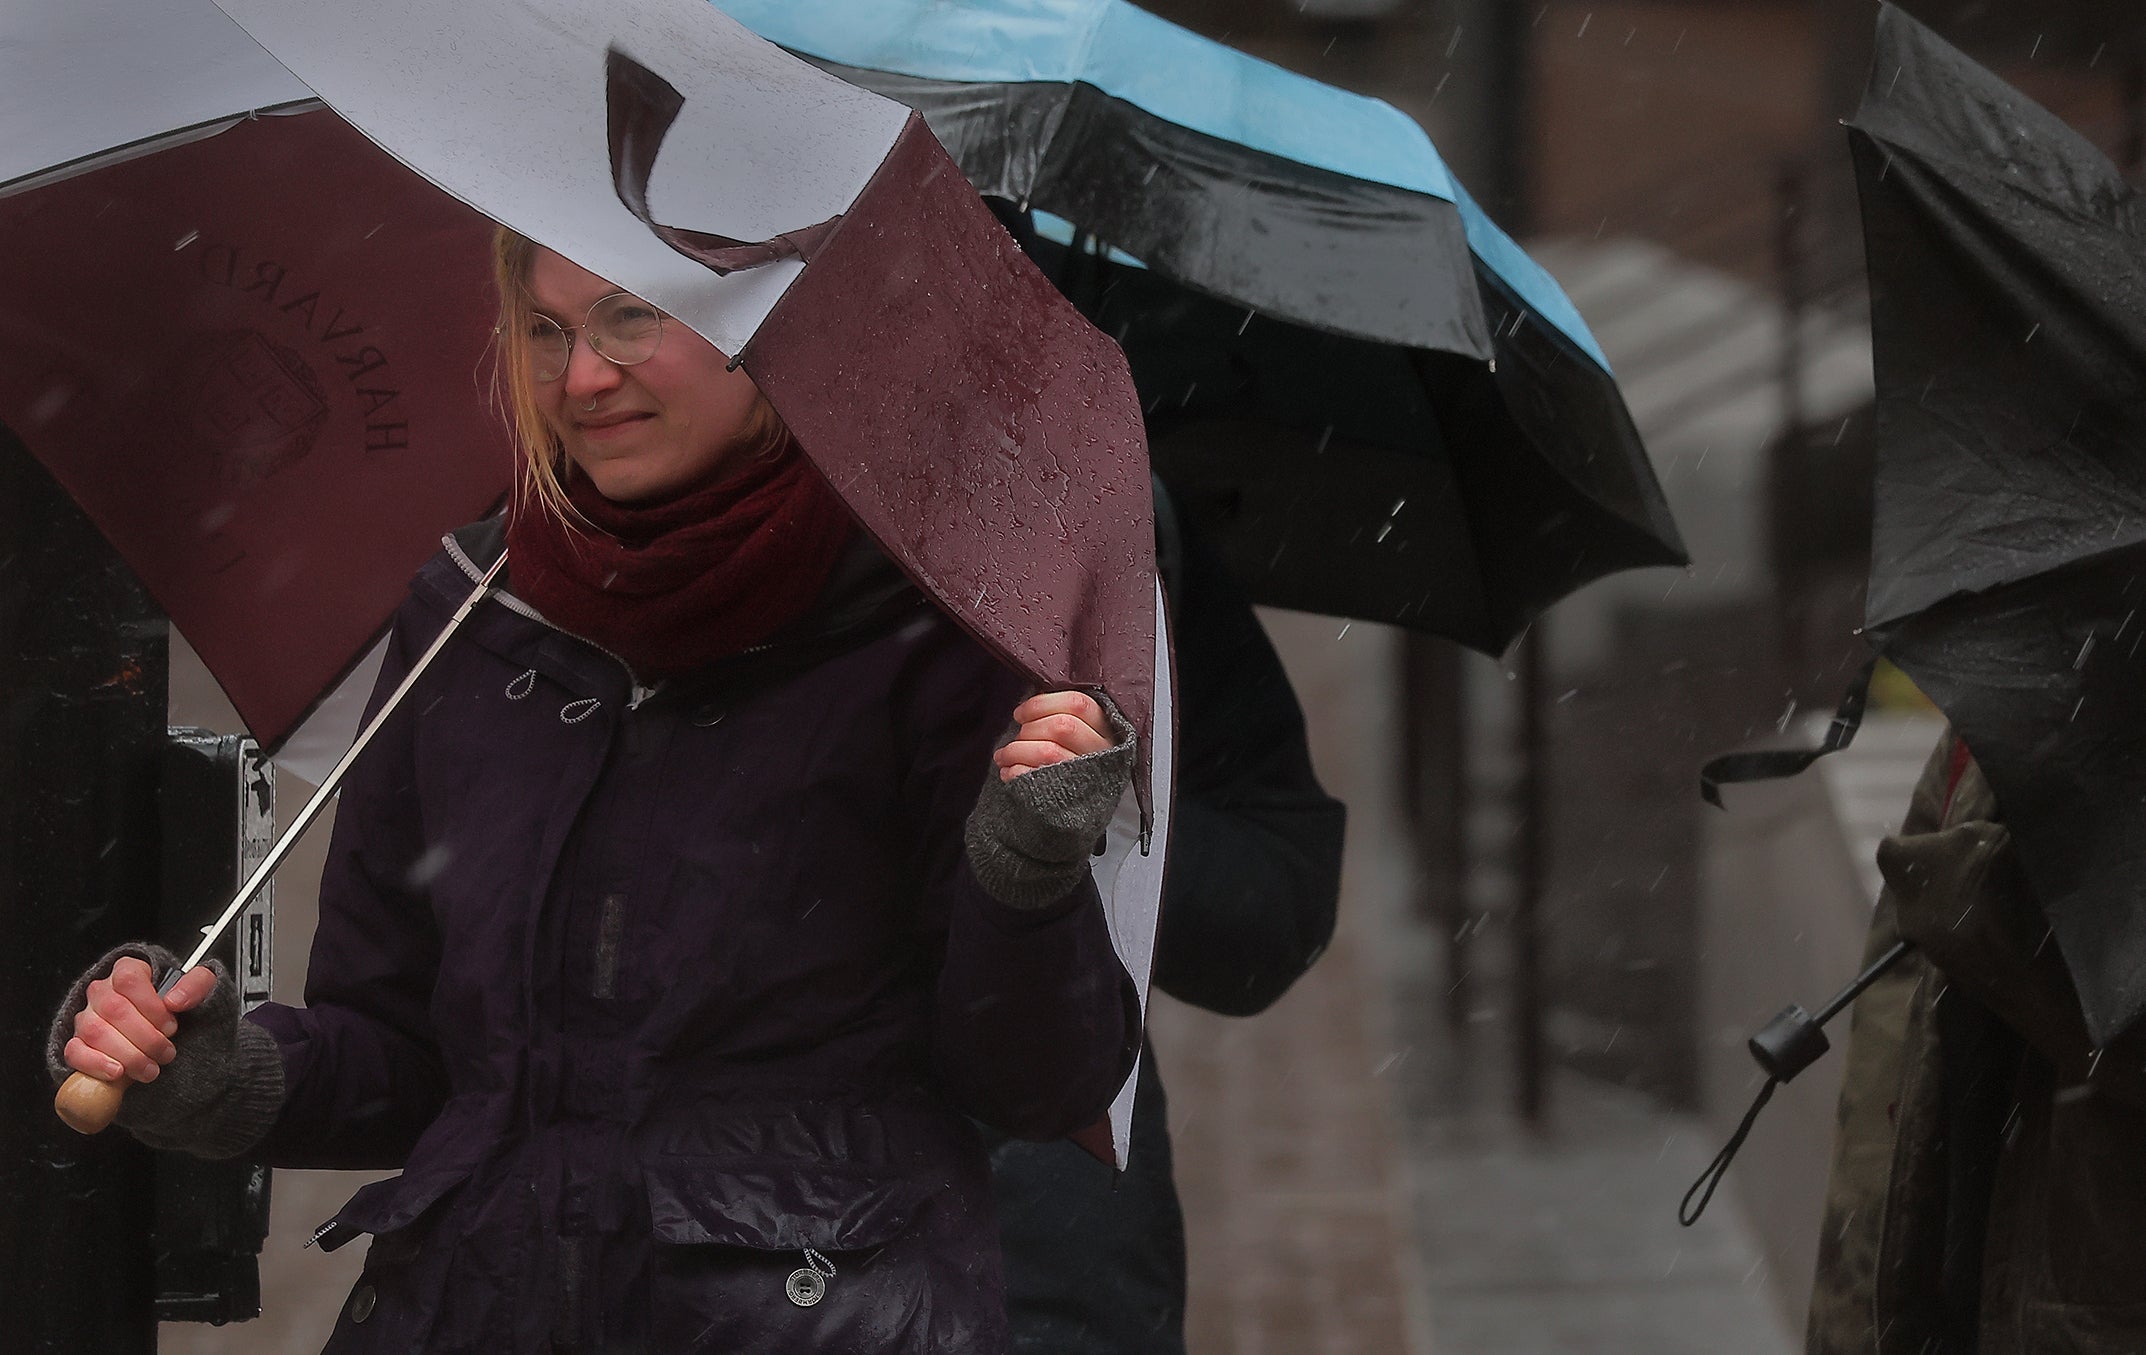 Pedestrians clutch umbrellas against the rain and wind